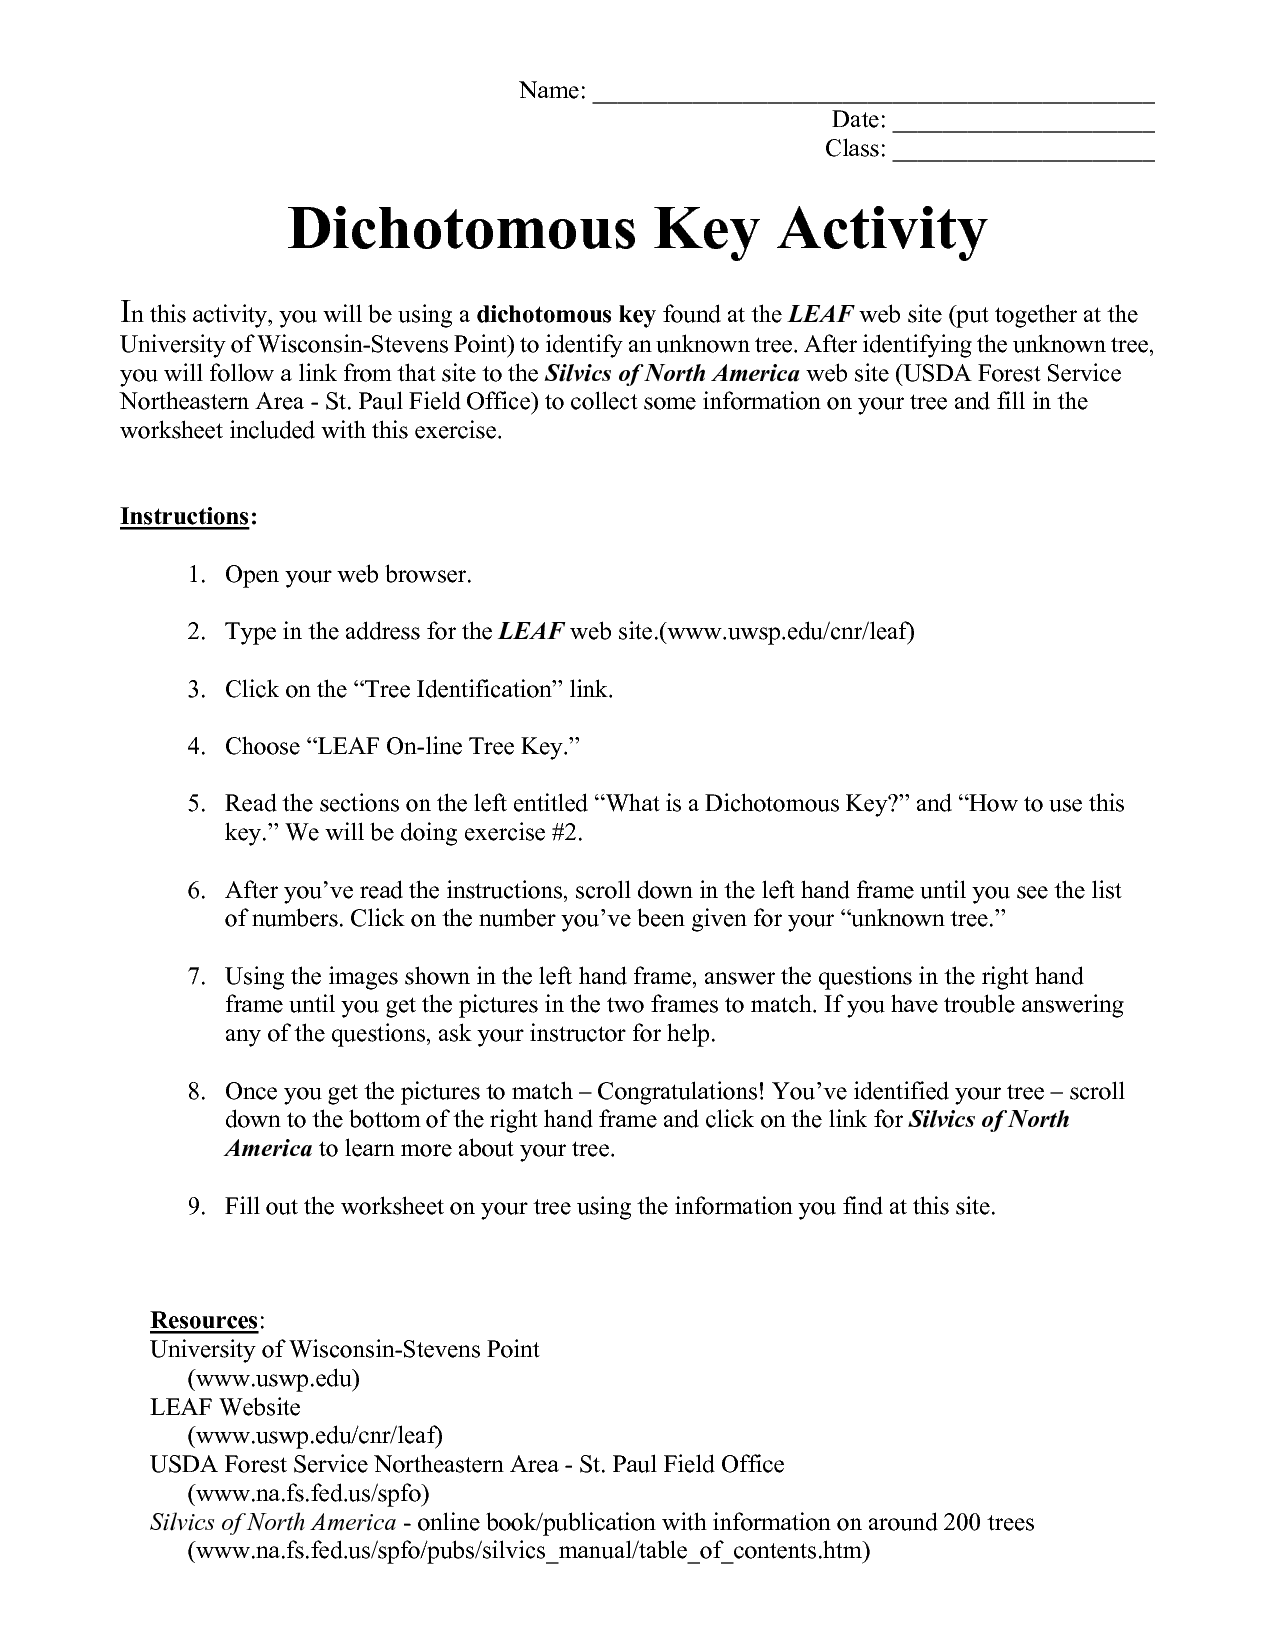 Dichotomous Key Worksheets Printable Image